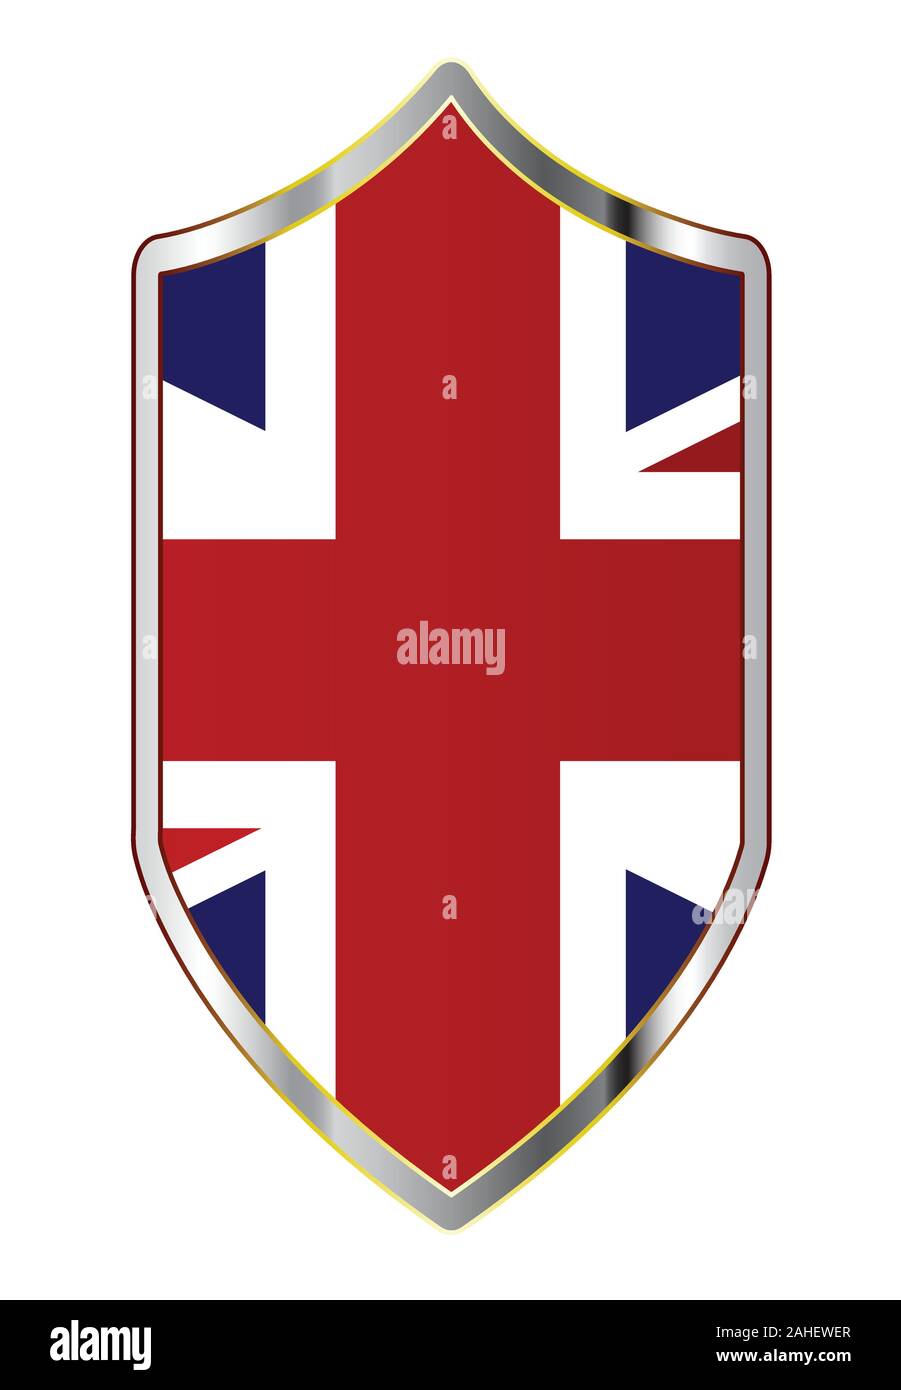 United Kingdom Flag Union Jack Three Stock Vector (Royalty Free) 504738616